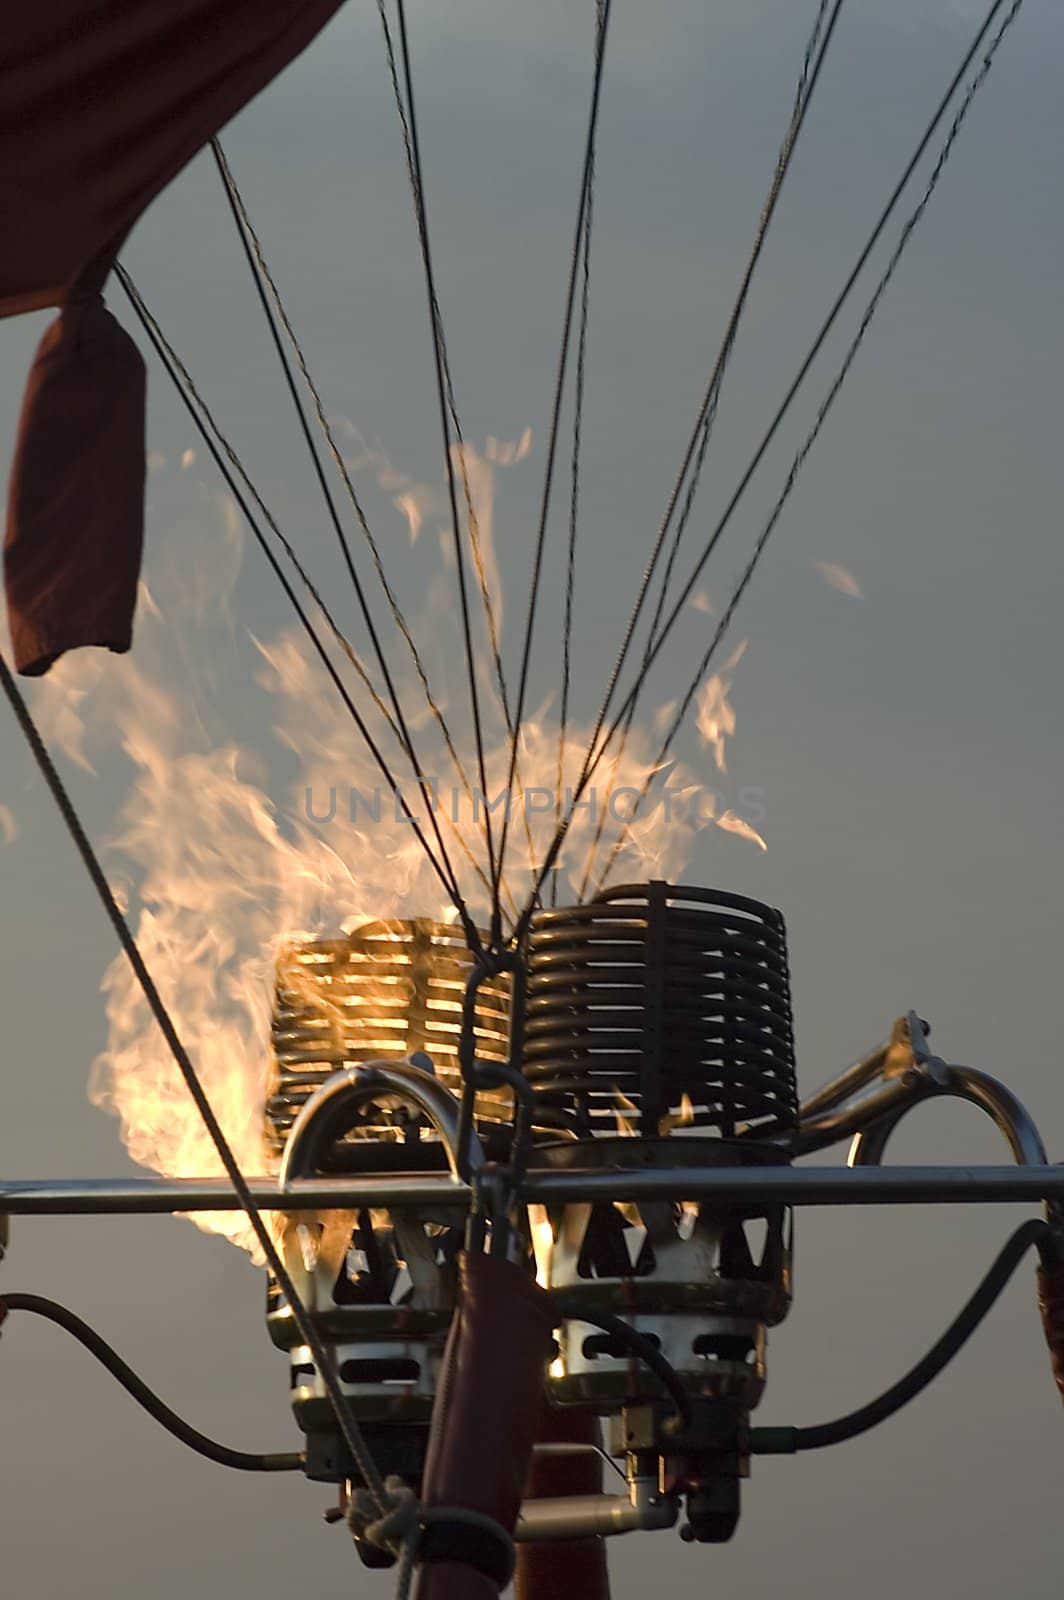 detail of a burner in a hot air balloon